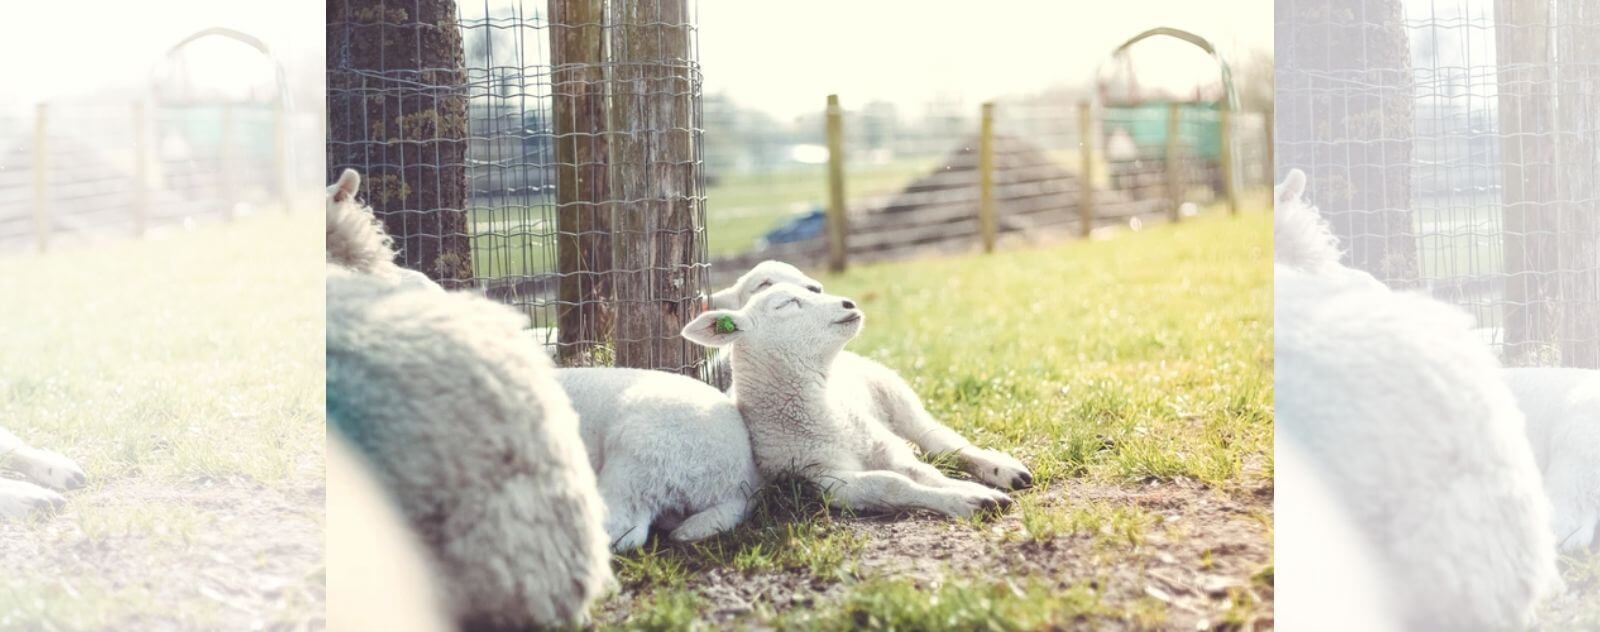 Happy Lamb, Sheep Welfare